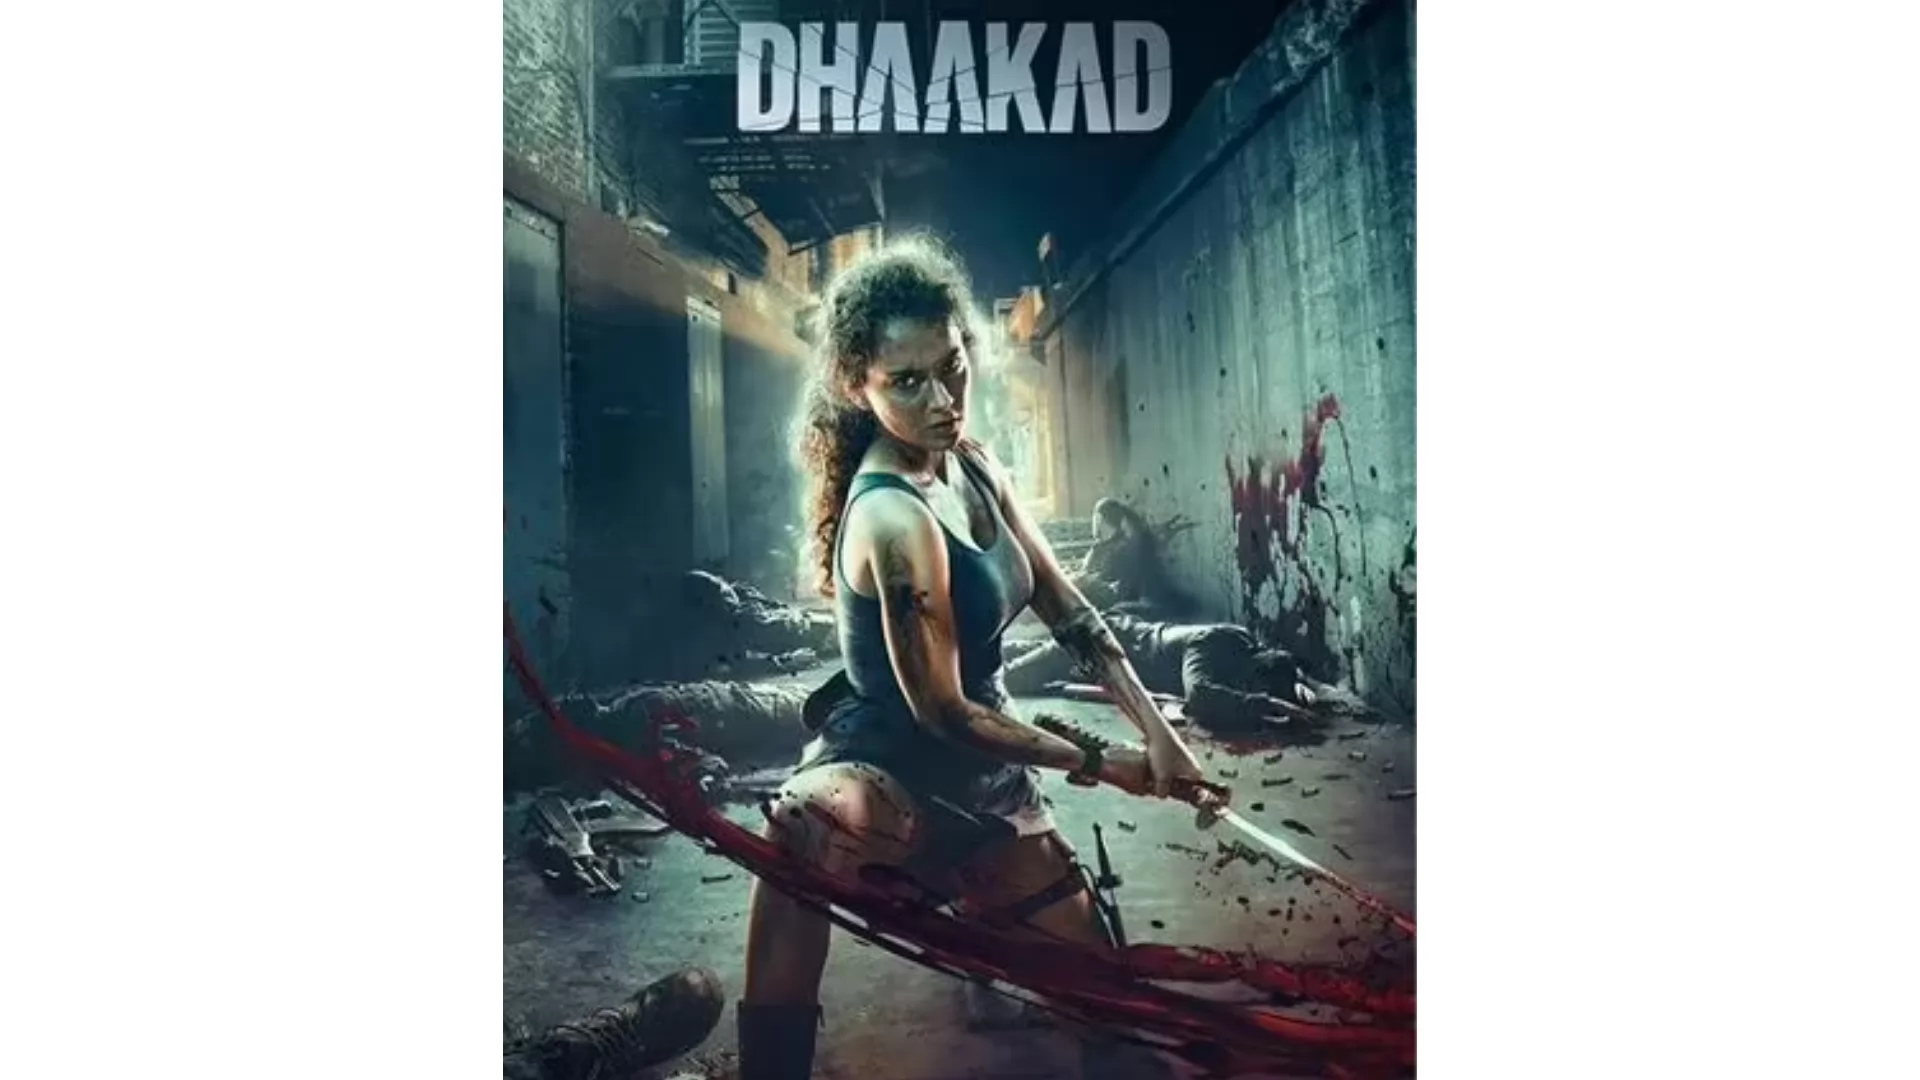 Dhaakad Movie Ticket Offers